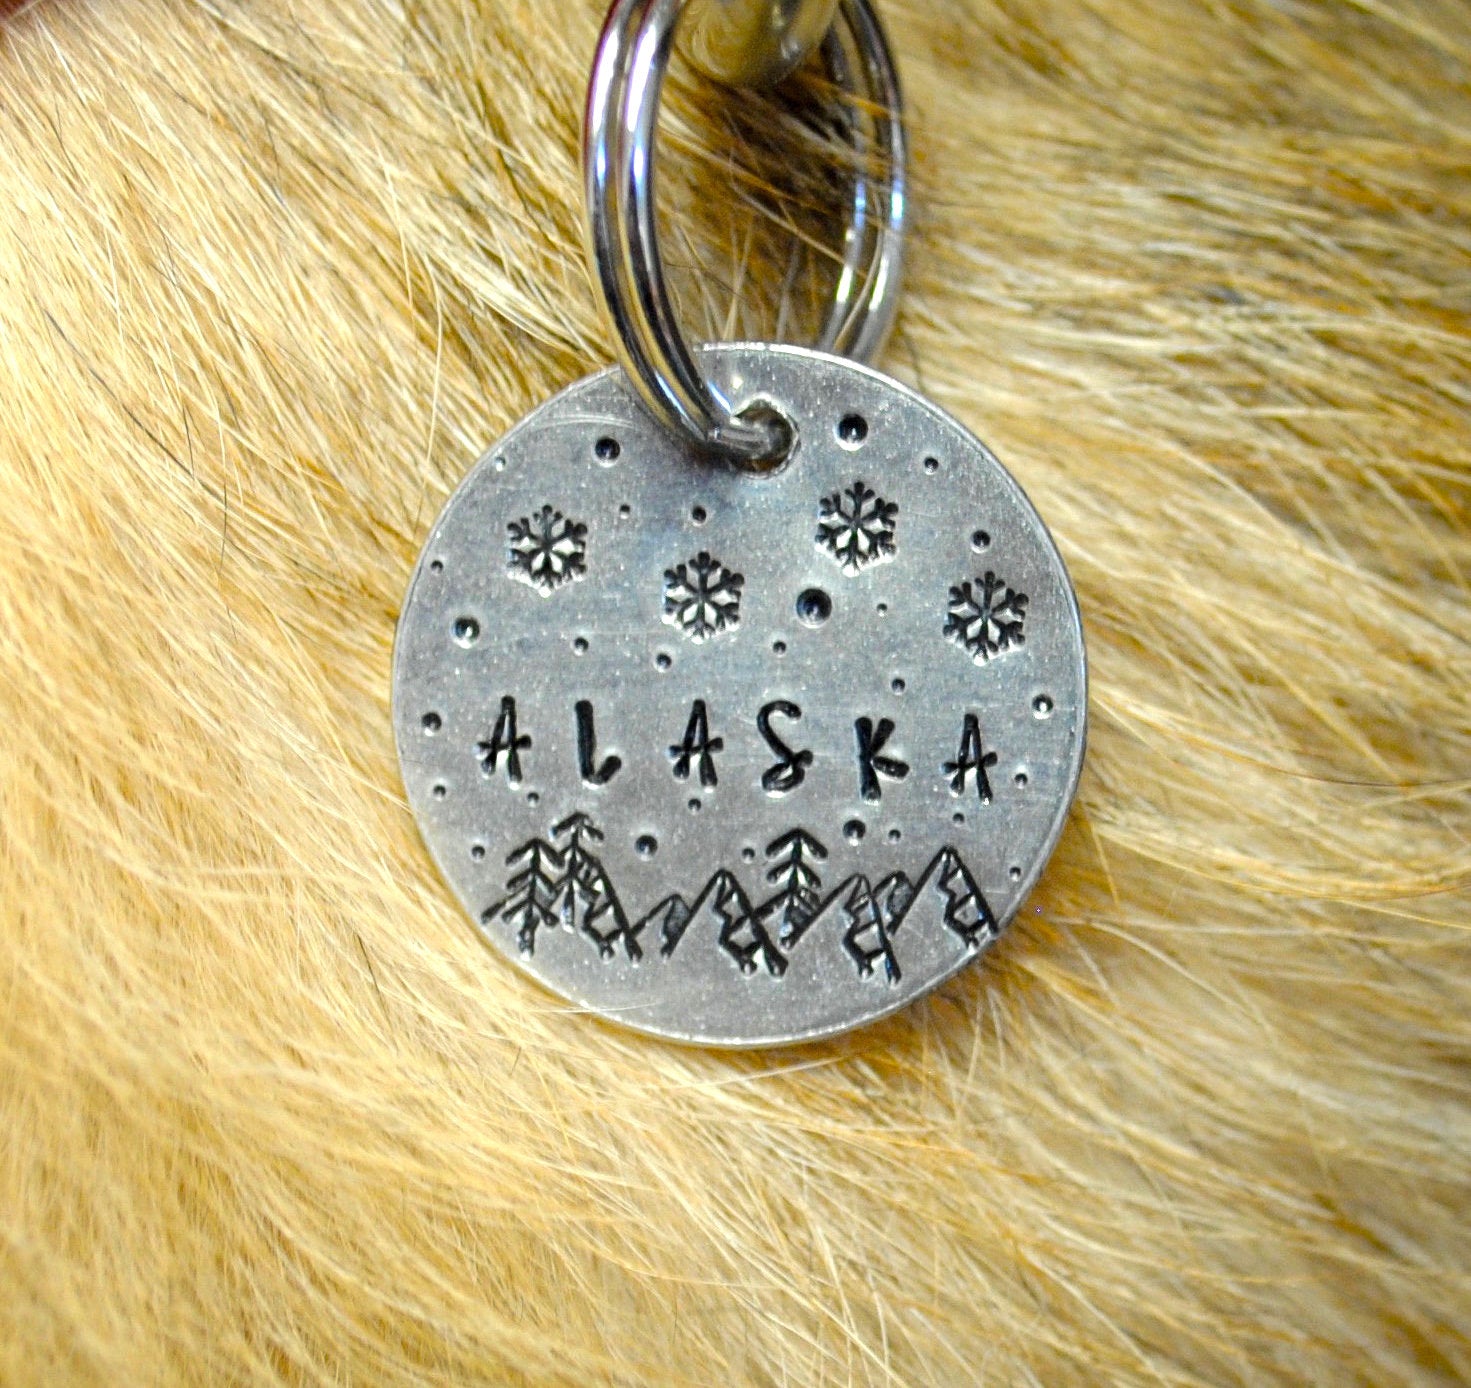 Snowflakes and Mountains Design Engraved Dog Tag - Cat ID Tag - Dog Collar Tag - Custom Dog Tag - Personalized Tag - Pet ID Tag - Pet Name Tag - Engraved Metal - Engraved Design - Snow - Mountains - Metal Working